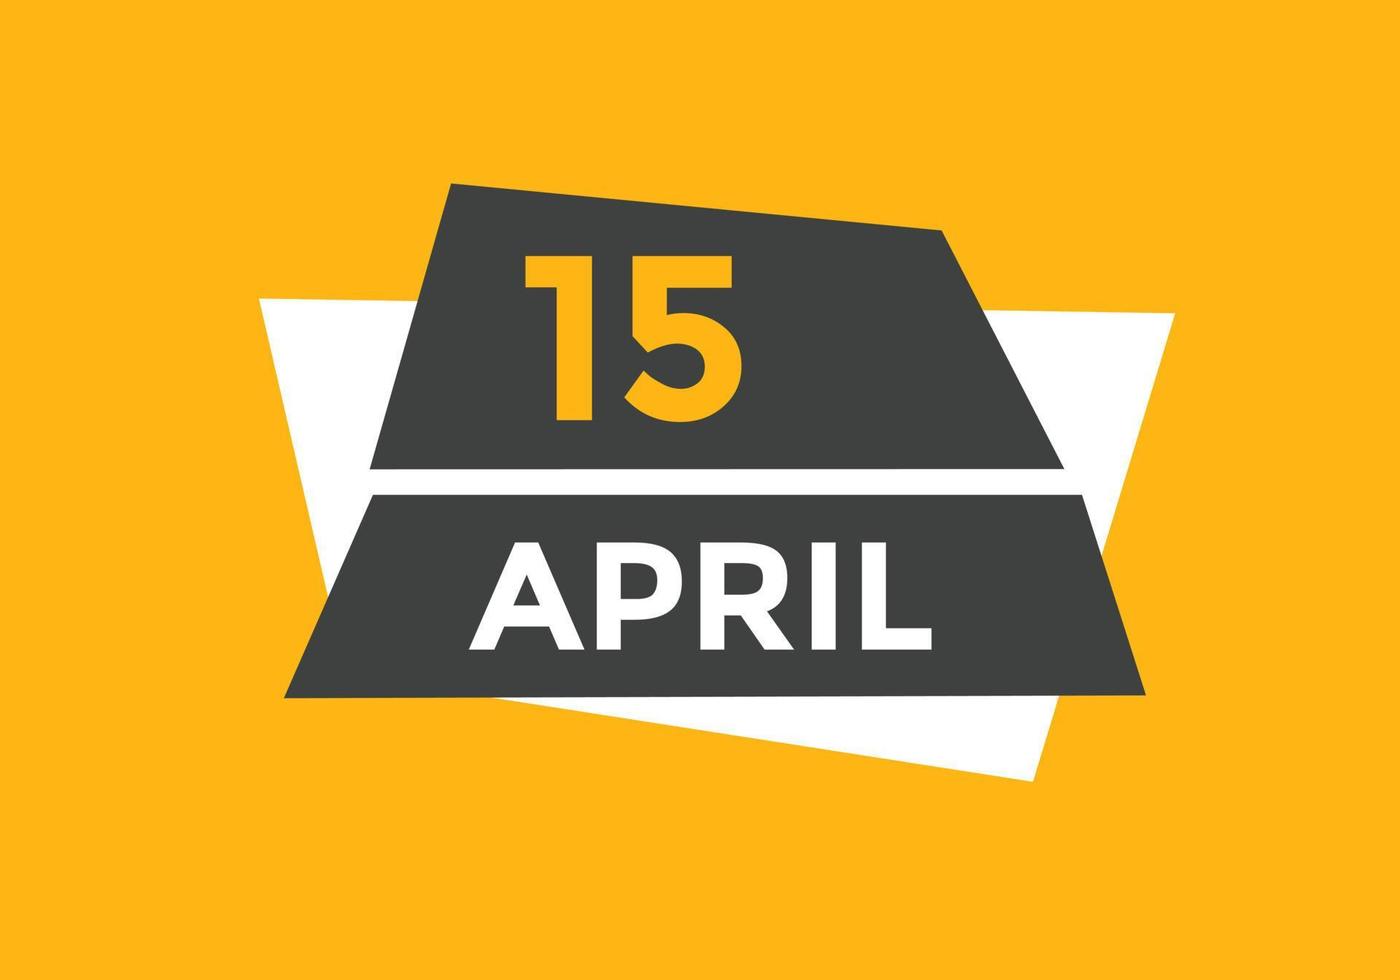 april 15 kalender påminnelse. 15:e april dagligen kalender ikon mall. kalender 15:e april ikon design mall. vektor illustration